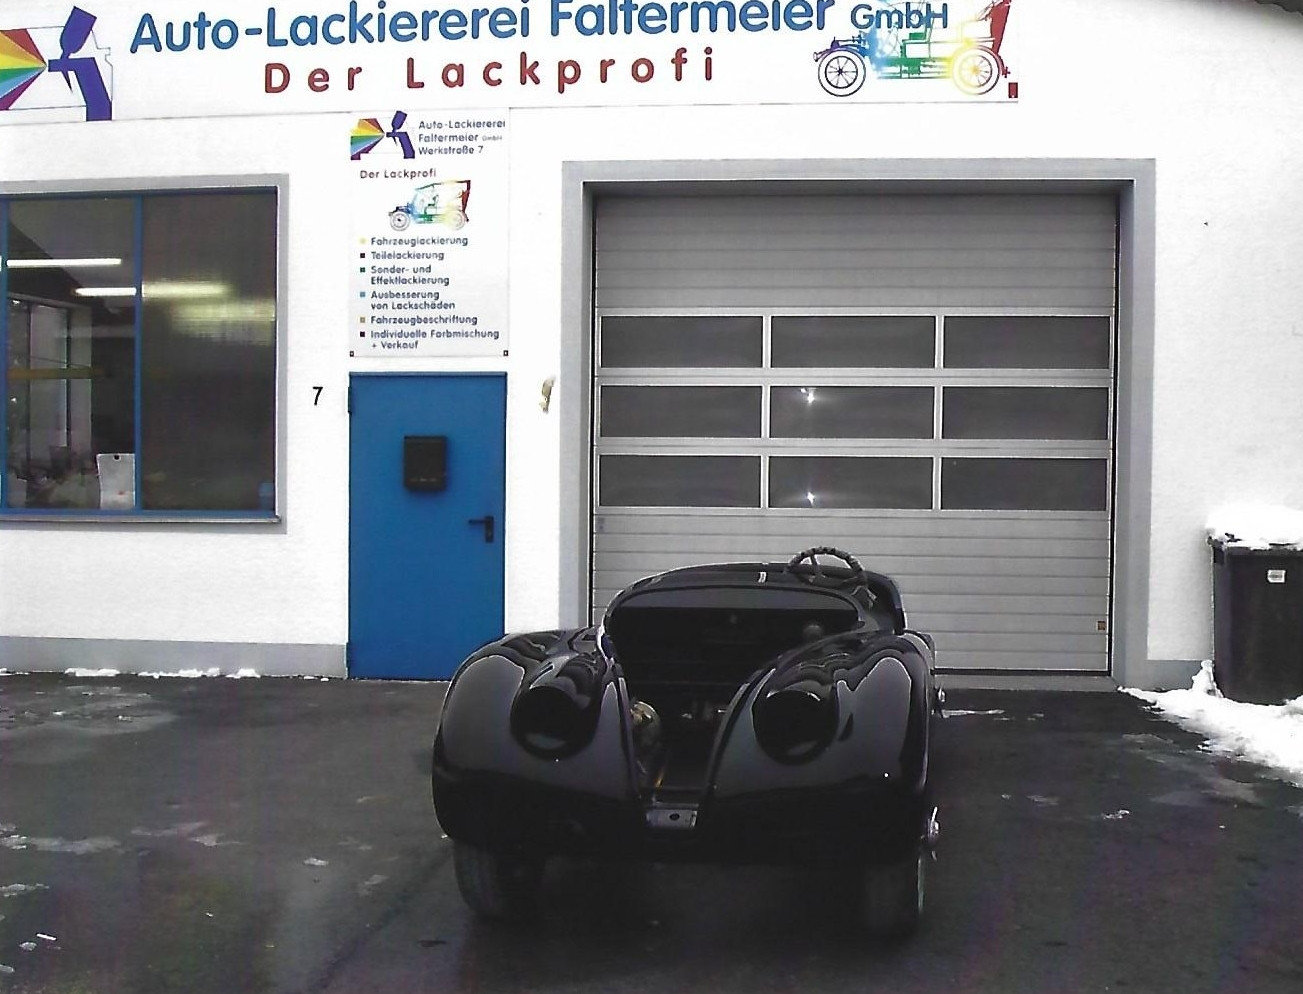 Autolackiererei Faltermeier GmbH